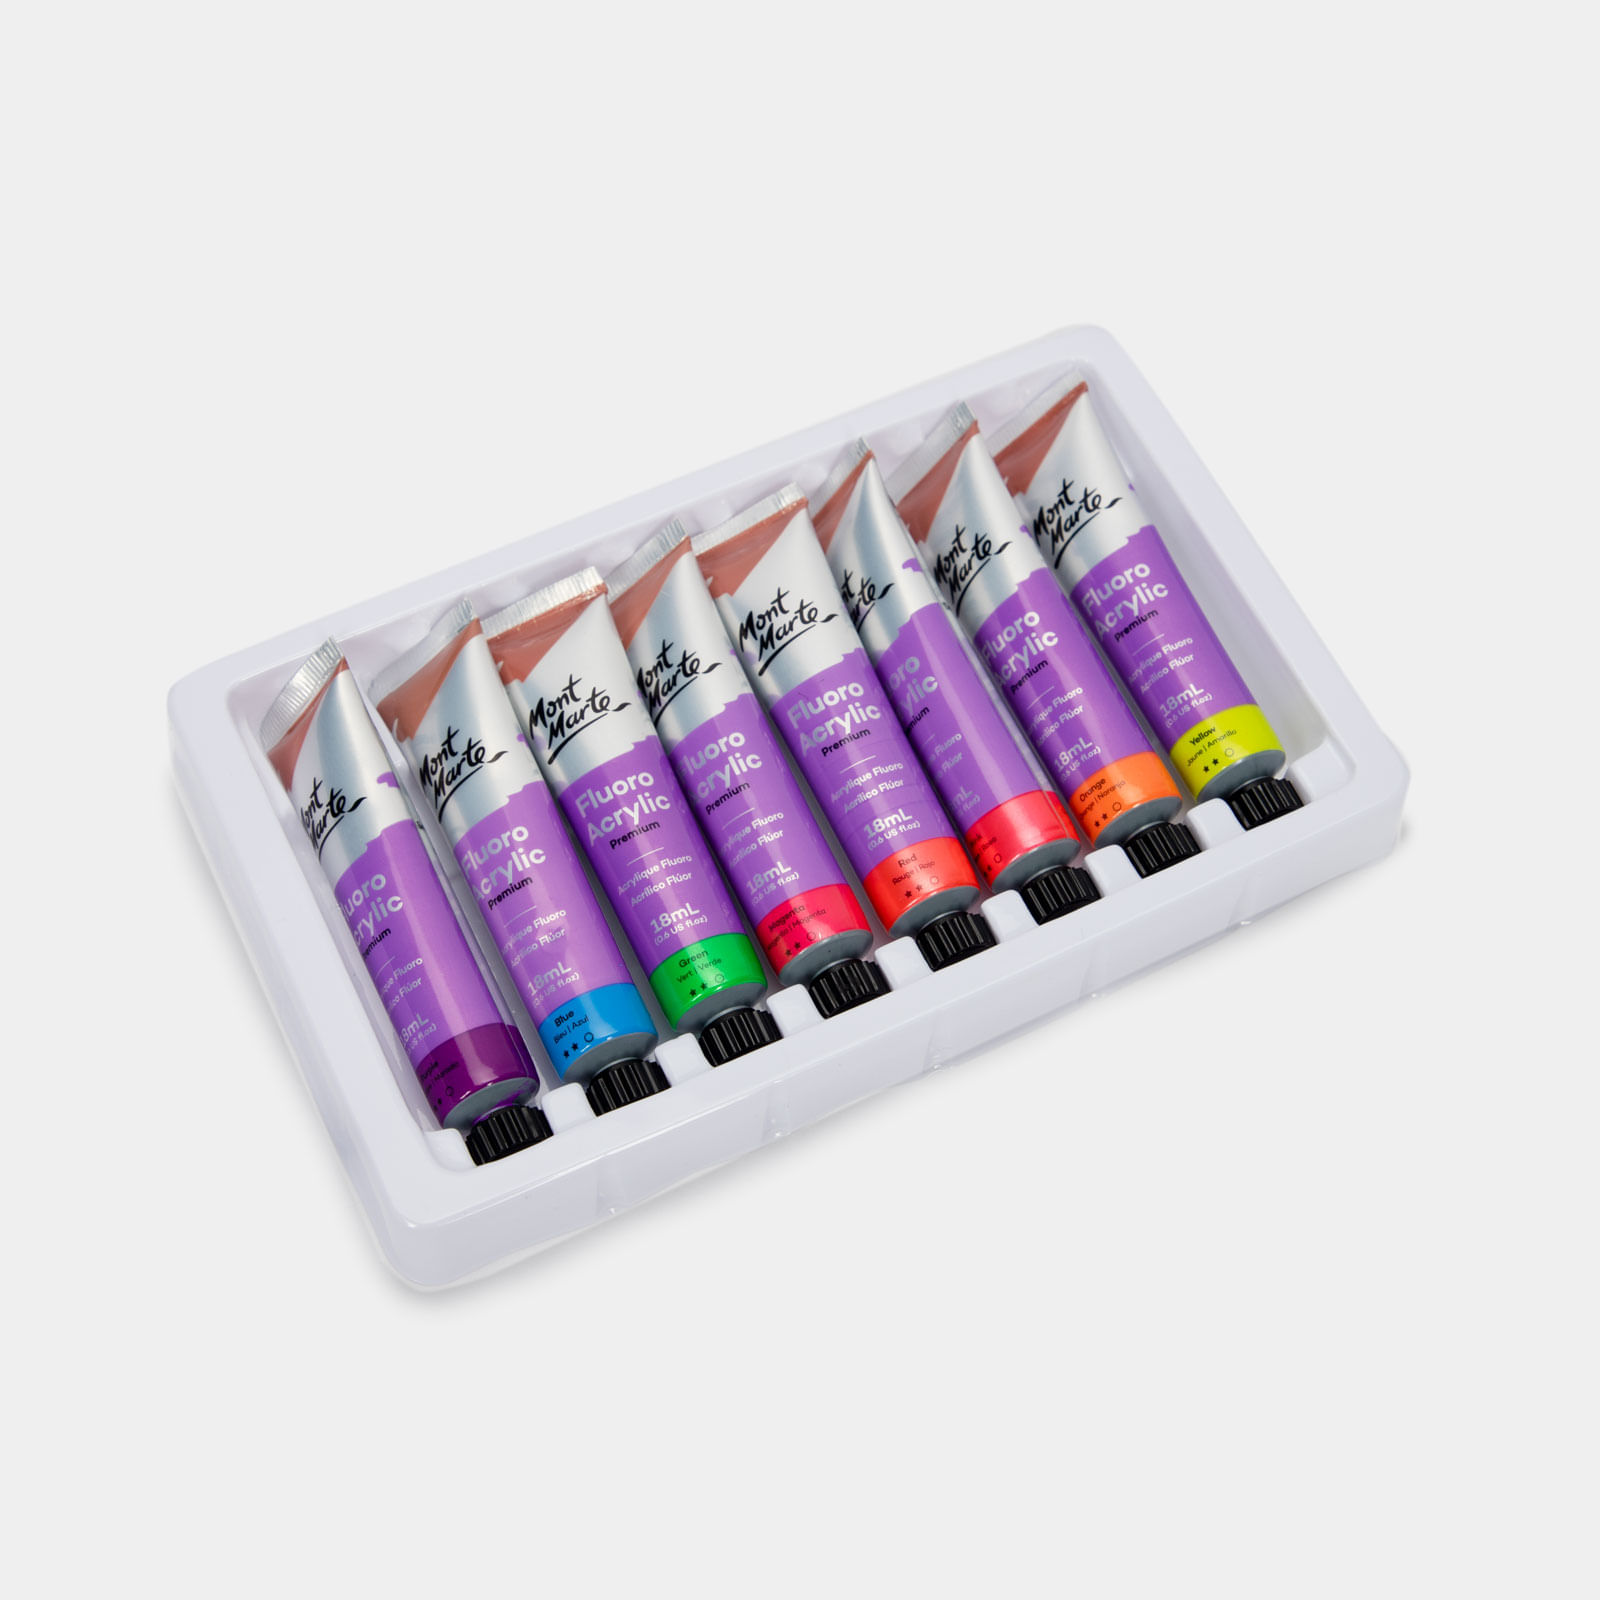 Kit de pintura acrílica x 10 unidades, Produart